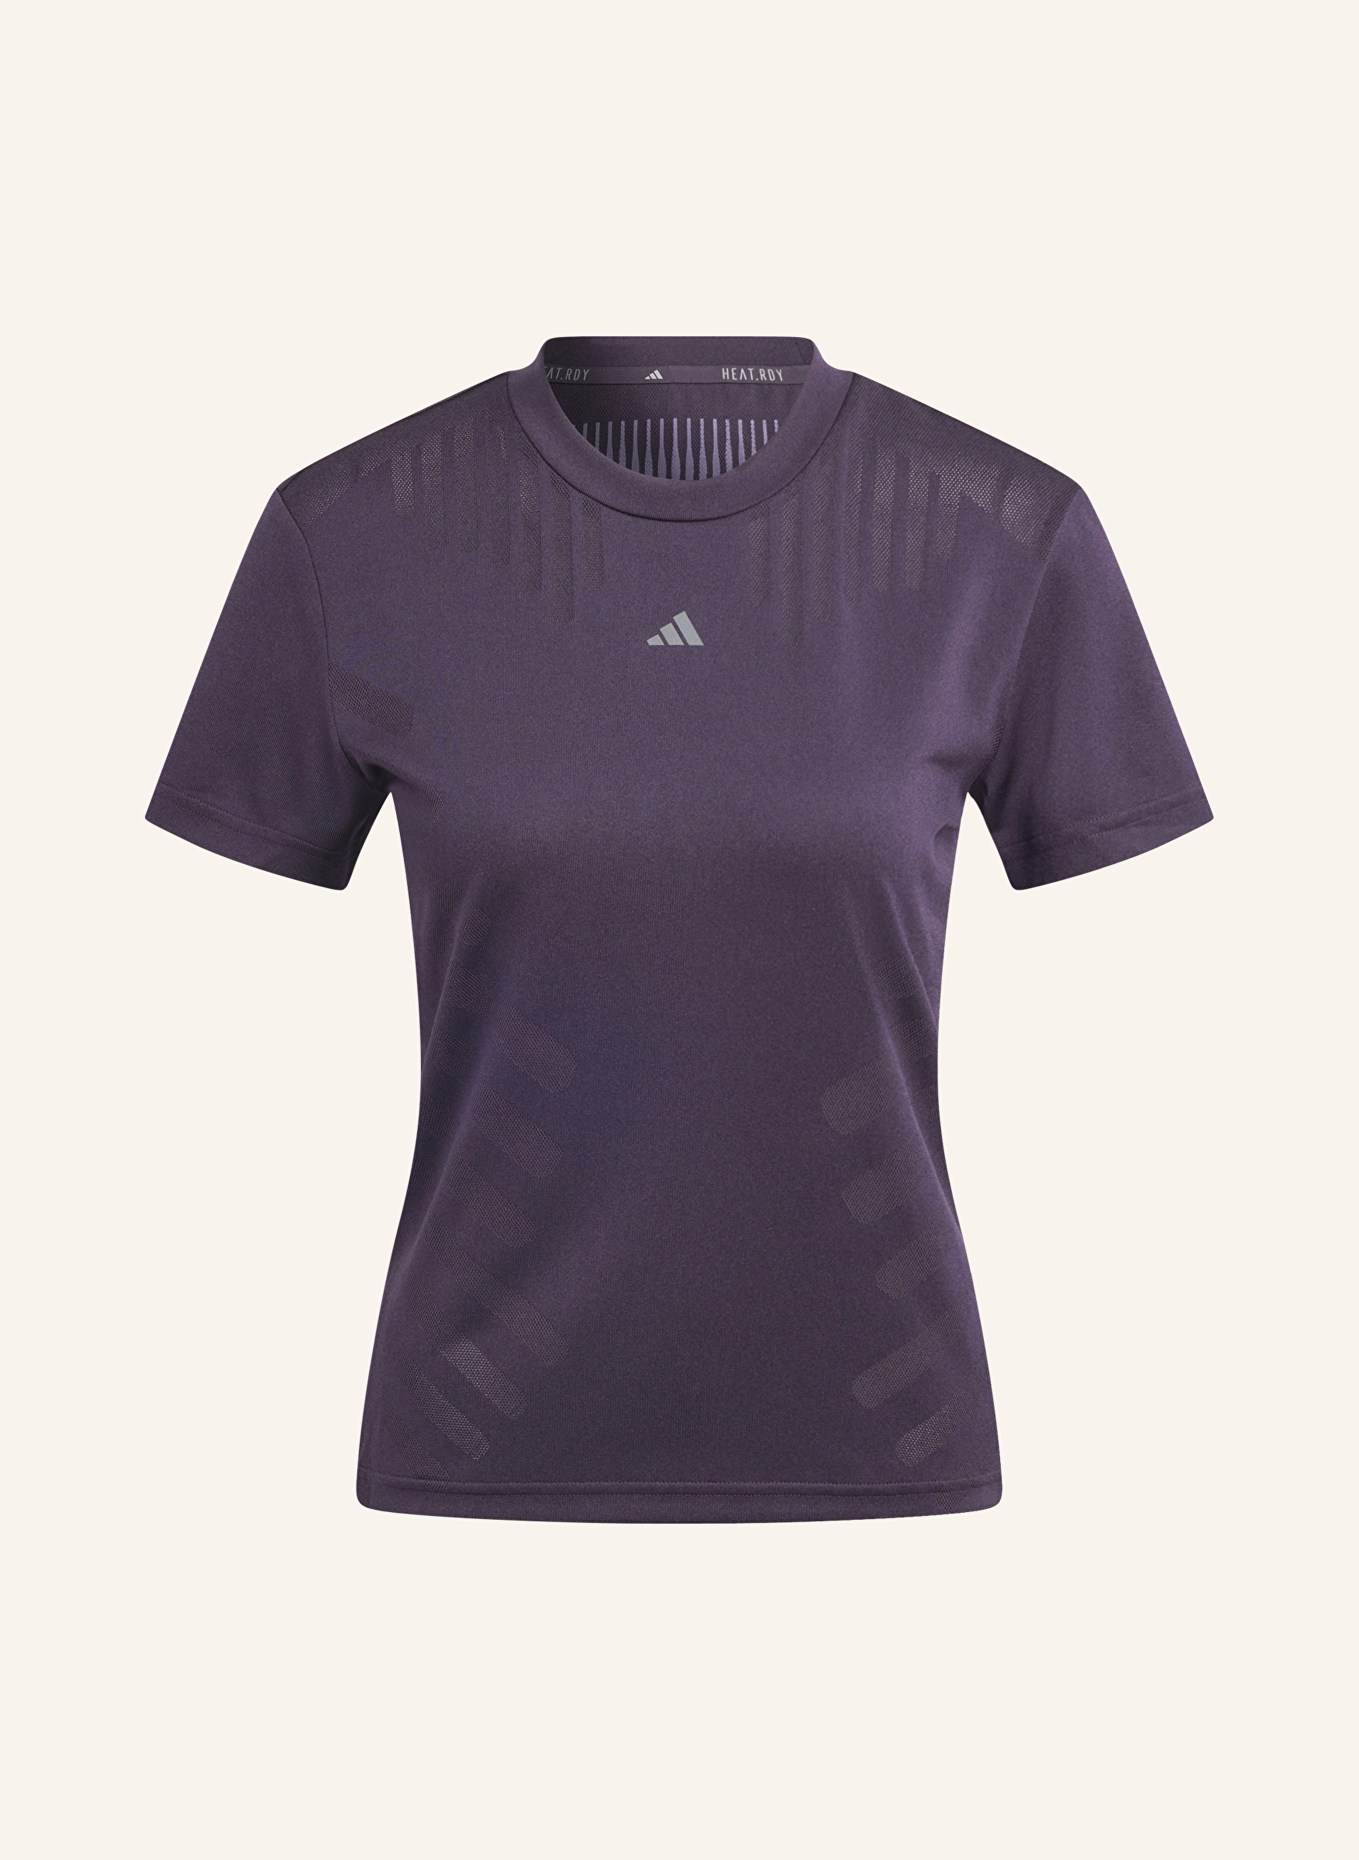 dark purple adidas shirt